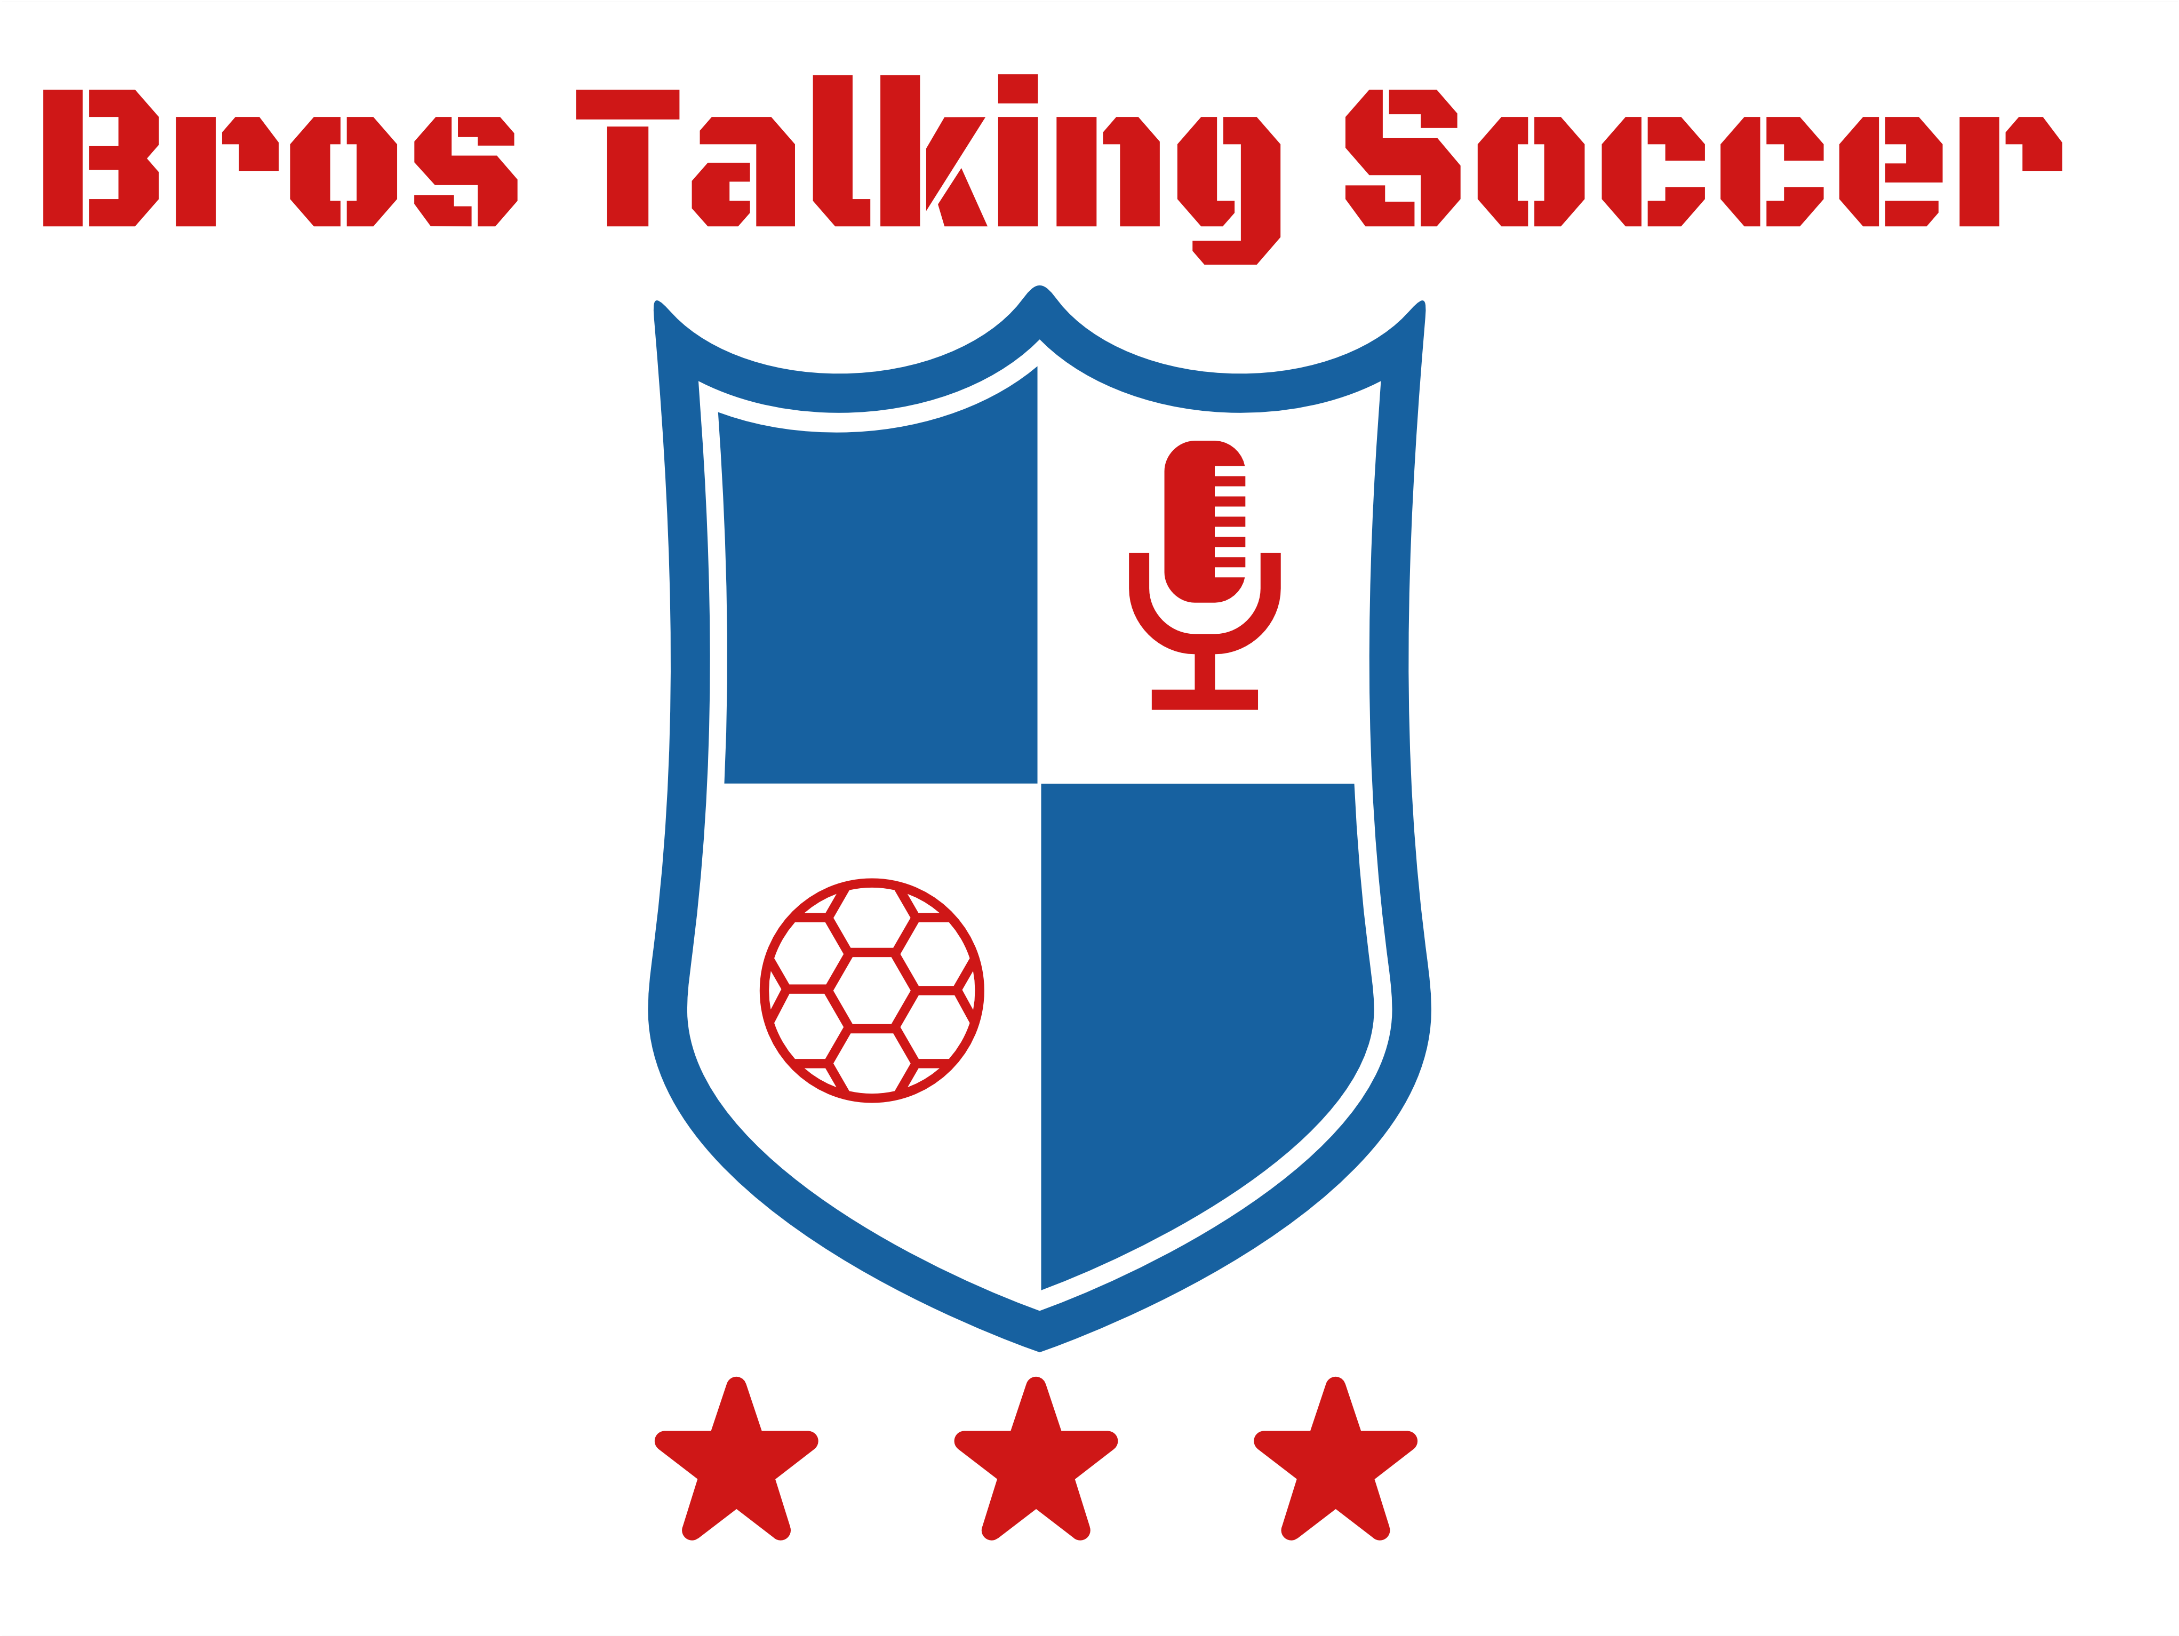 Bros Talking Soccer Episode - Football (2667x2667)